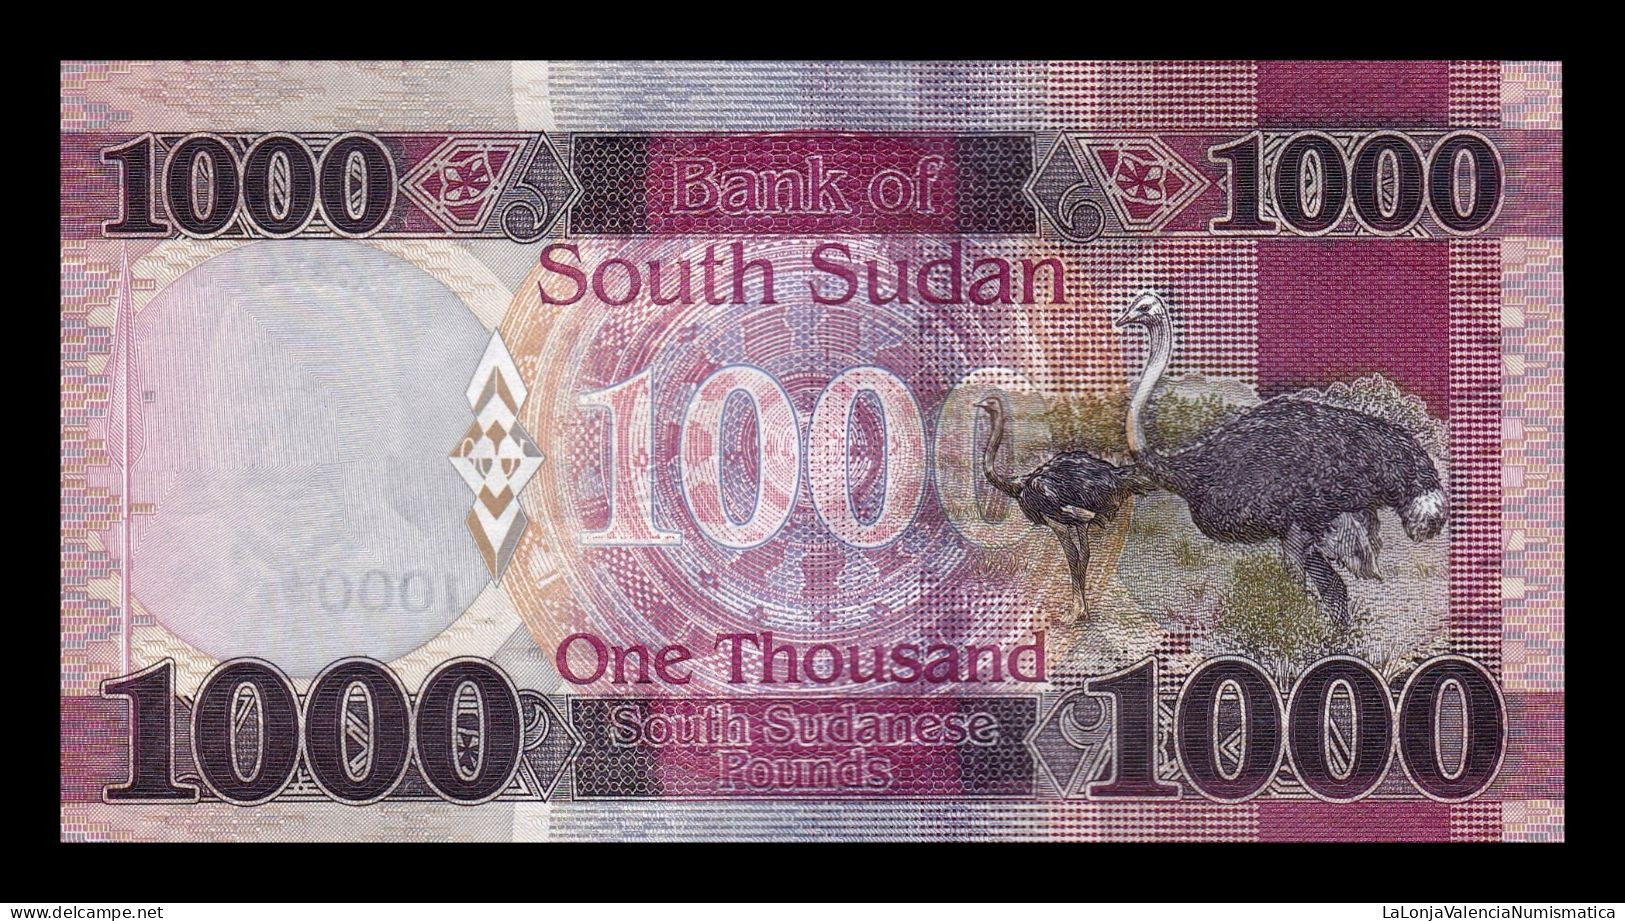 Sudán Del Sur South Sudan 1000 Pounds 2020 Pick 17a Sc Unc - Sudan Del Sud